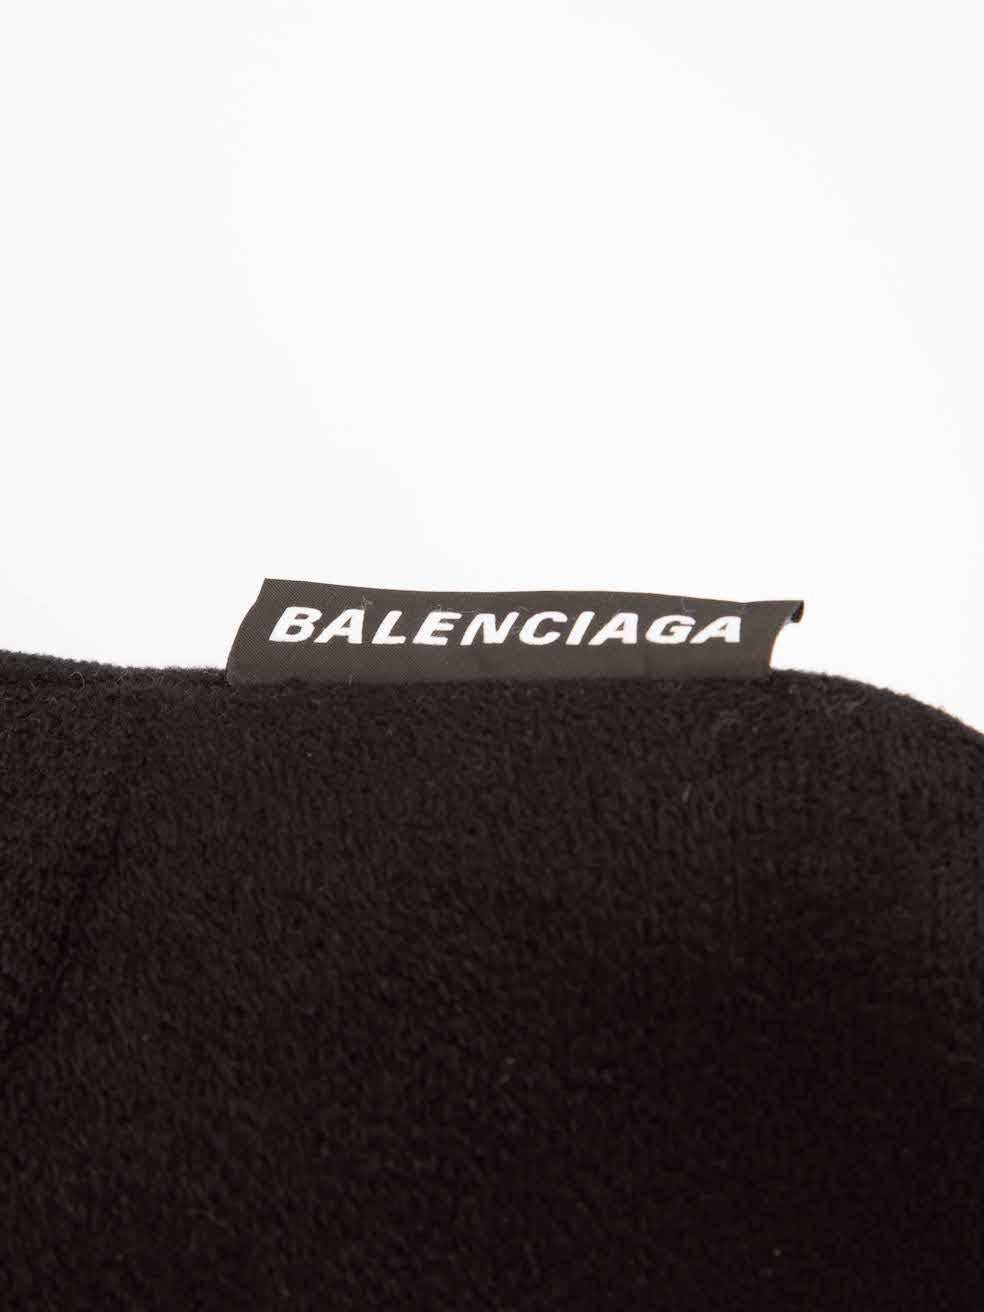 Women's Balenciaga Black Stretch Turtleneck Maxi Dress Size M For Sale